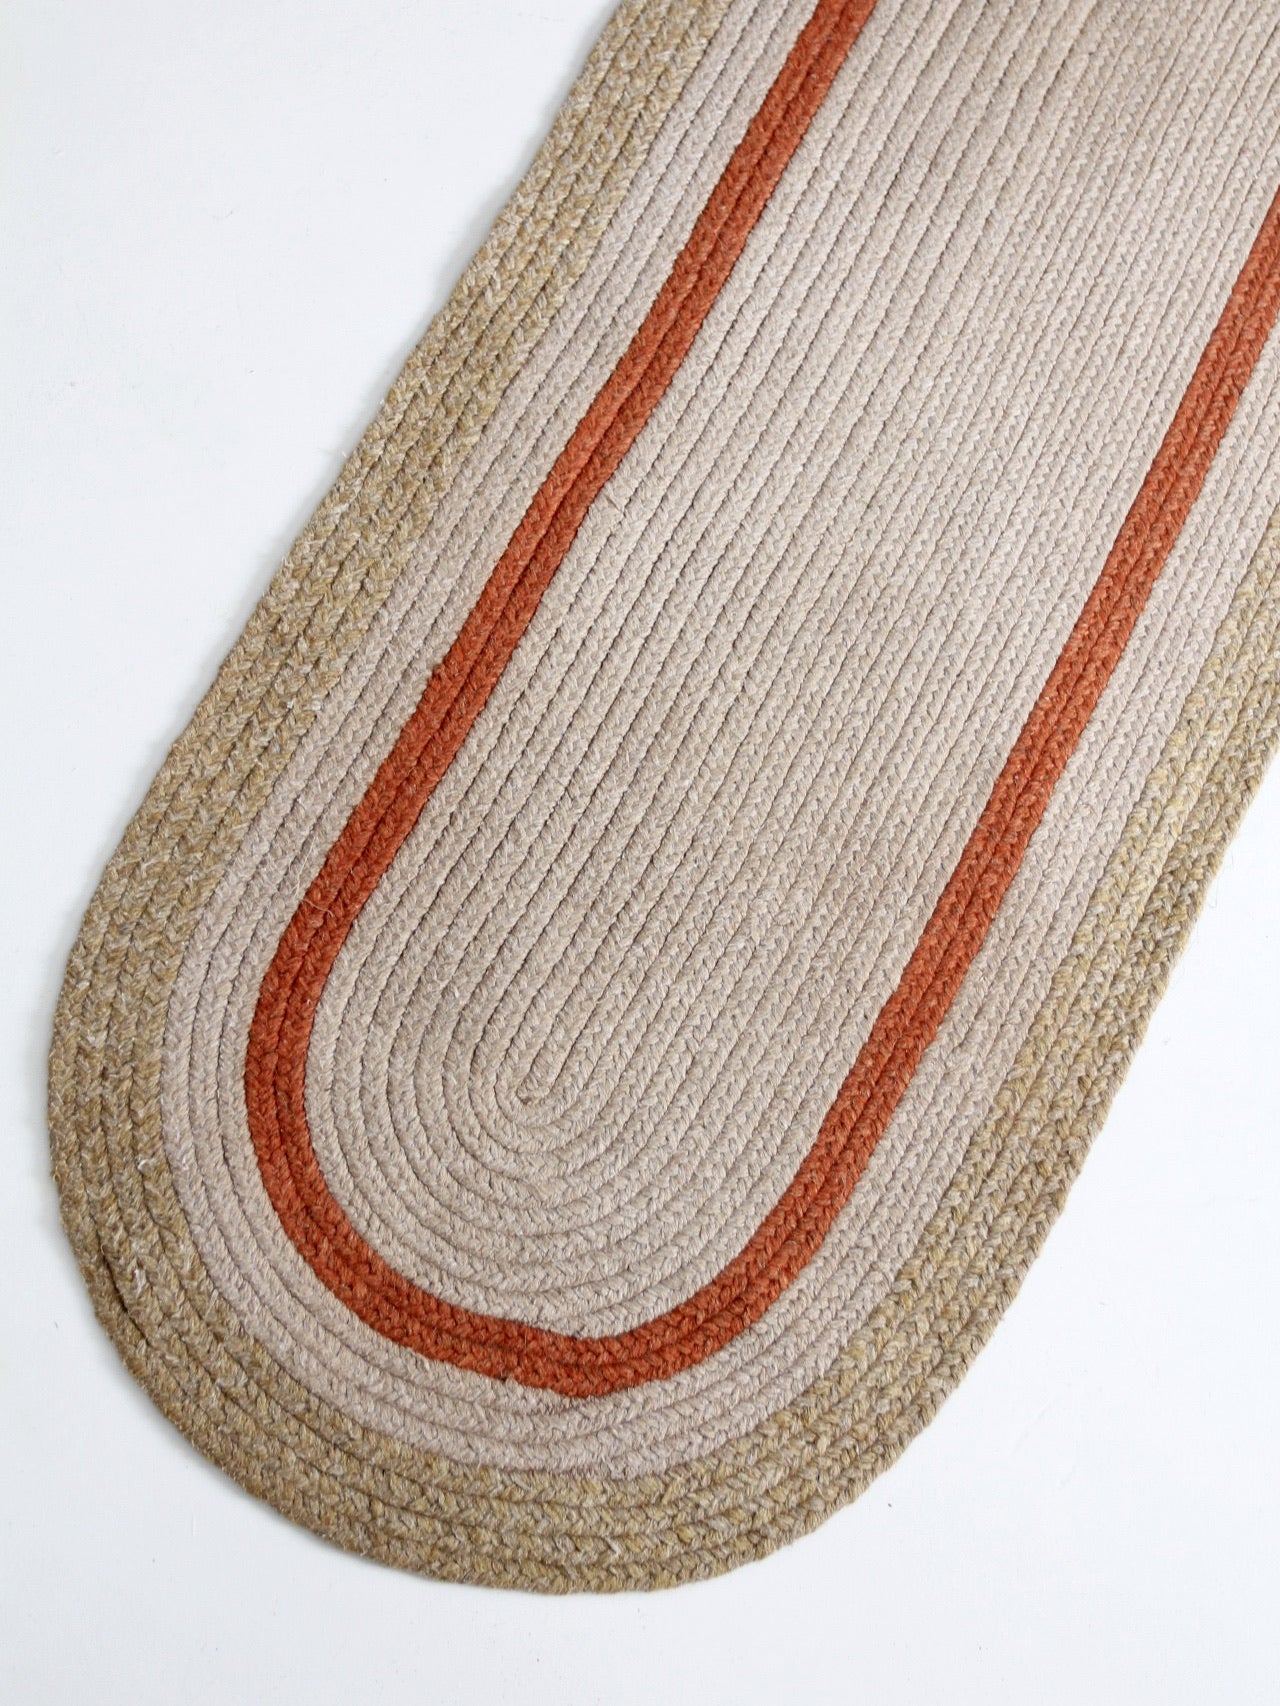 vintage braided 9 ft oval rug